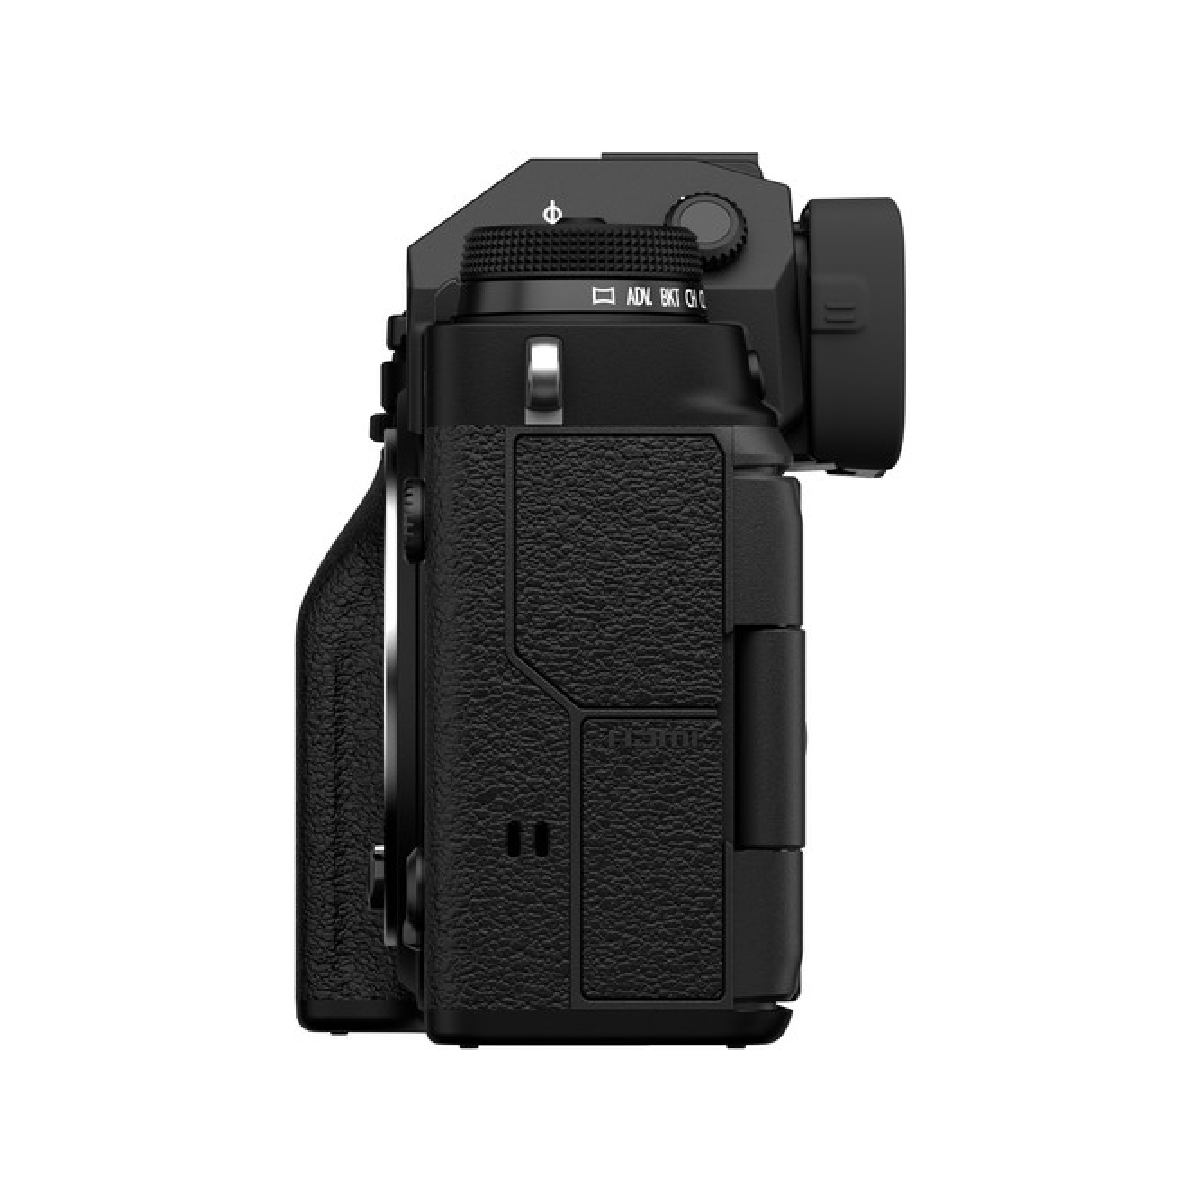 Fujifilm X-T4 26 MP Mirrorless Camera Body – Black (3)